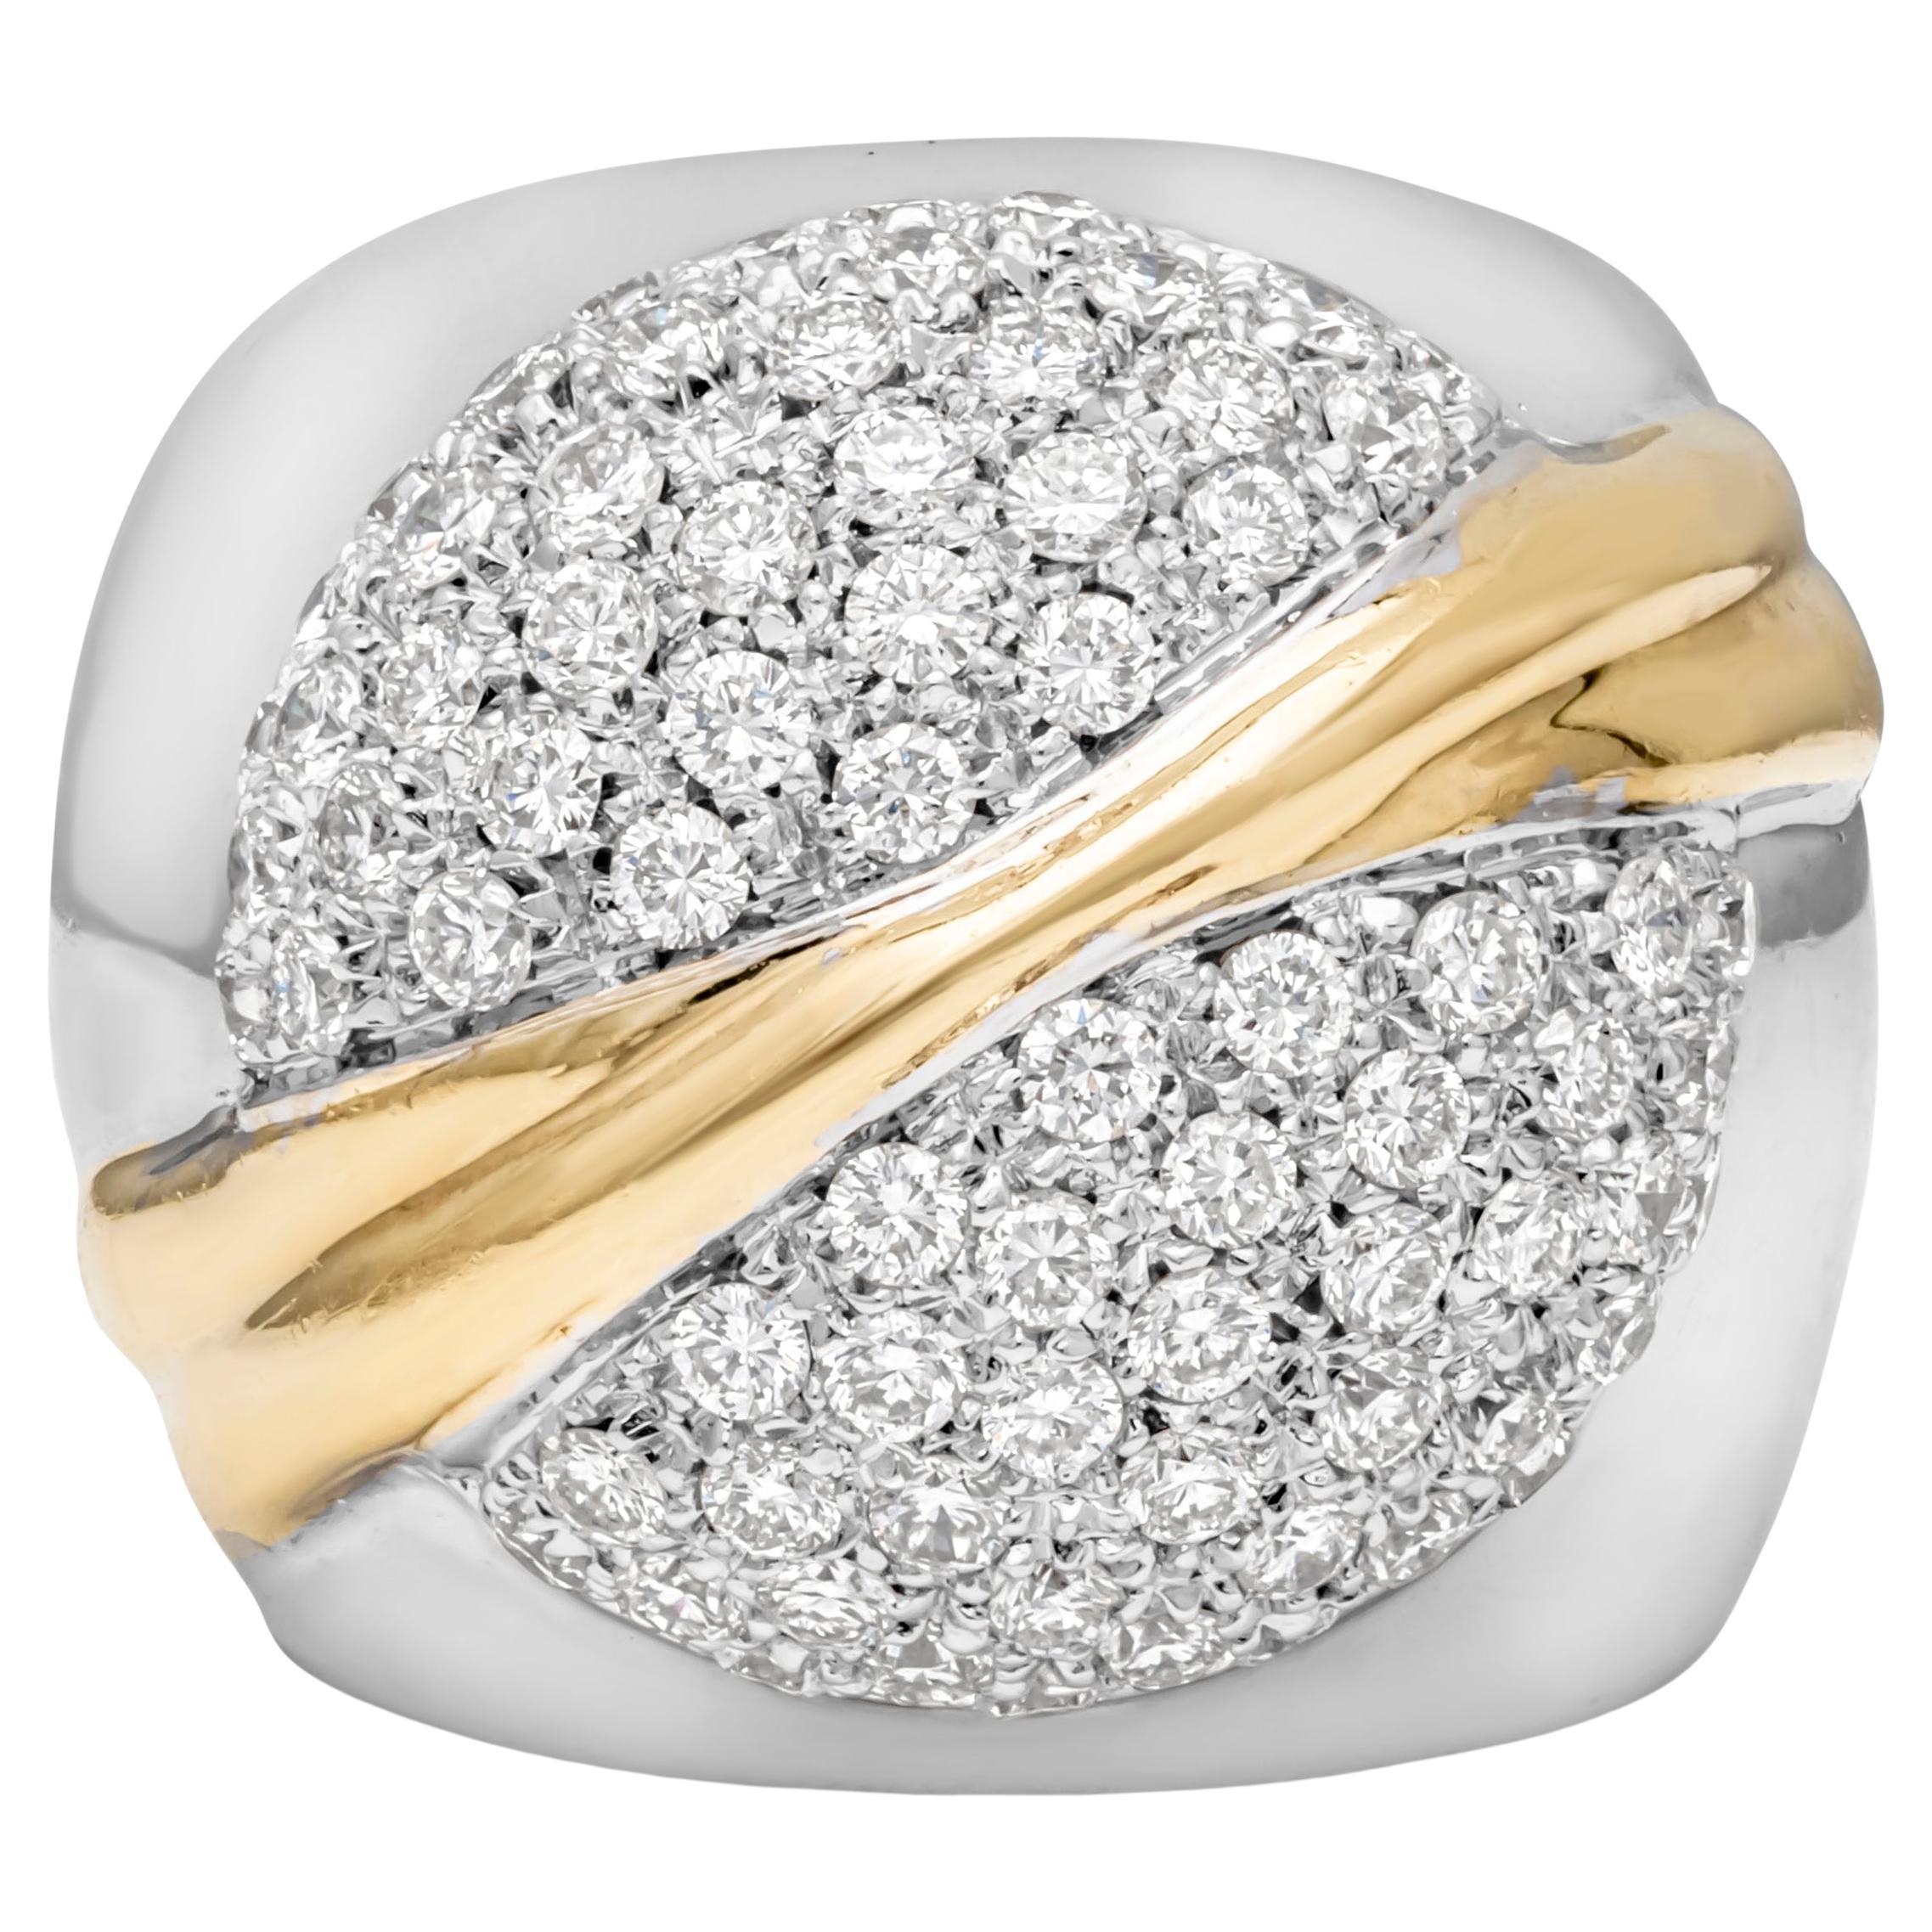 Roman Malakov 3.06 Carats Total Brilliant Round Cut Diamond Wide Fashion Ring